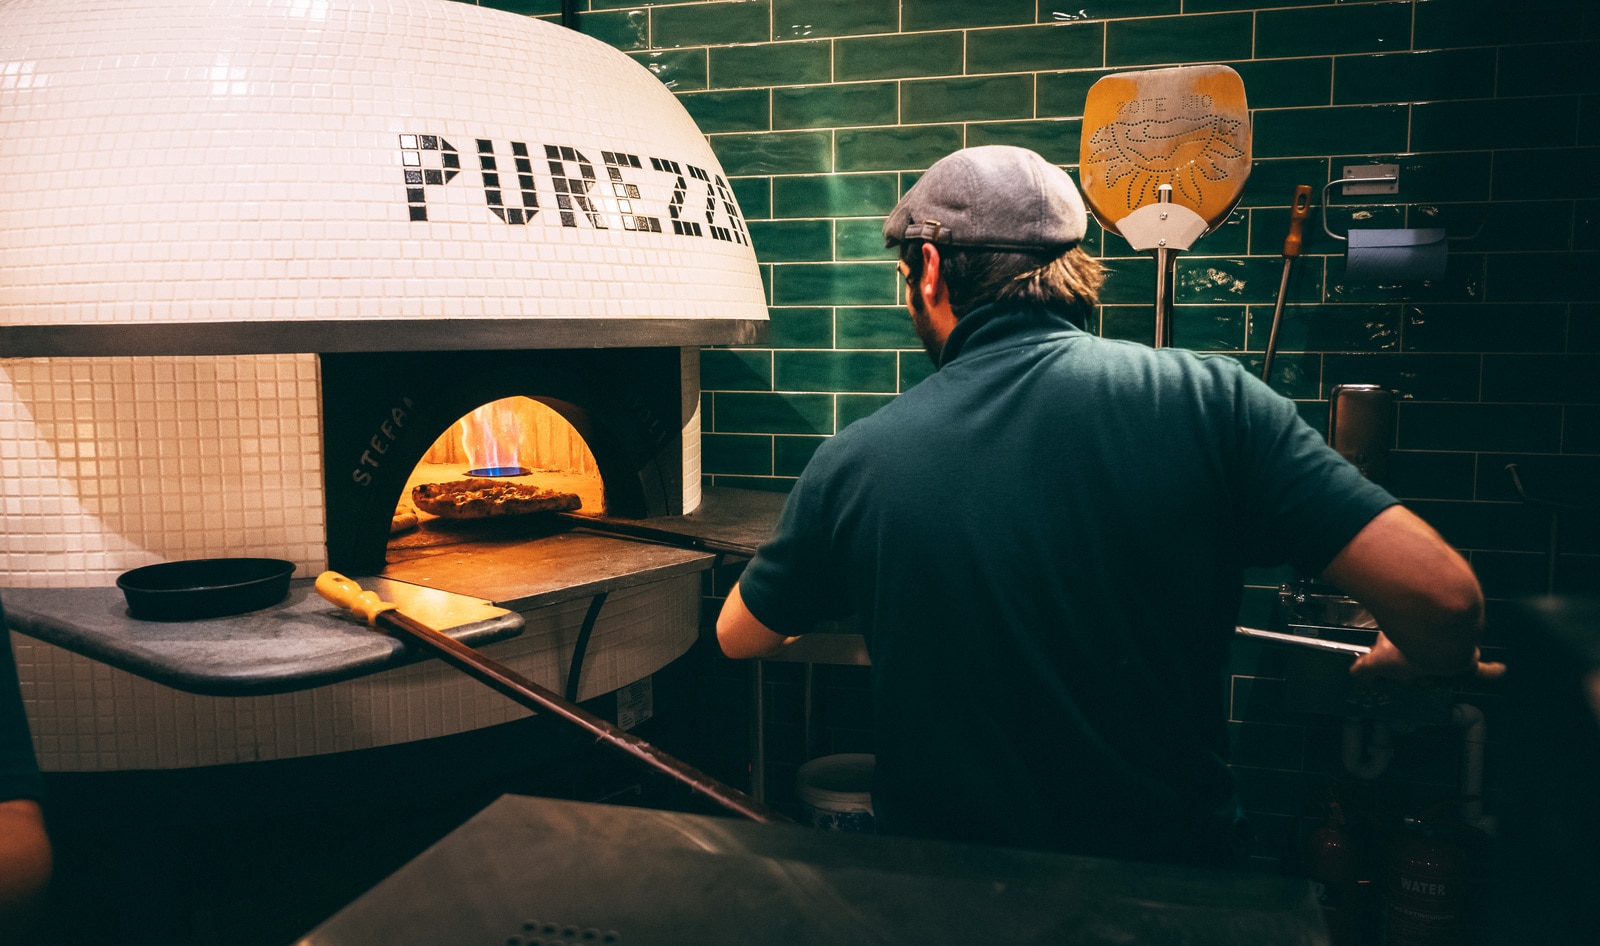 UK’s First Vegan Pizzeria to Open New Location in Shuttered Butcher Shop&nbsp;